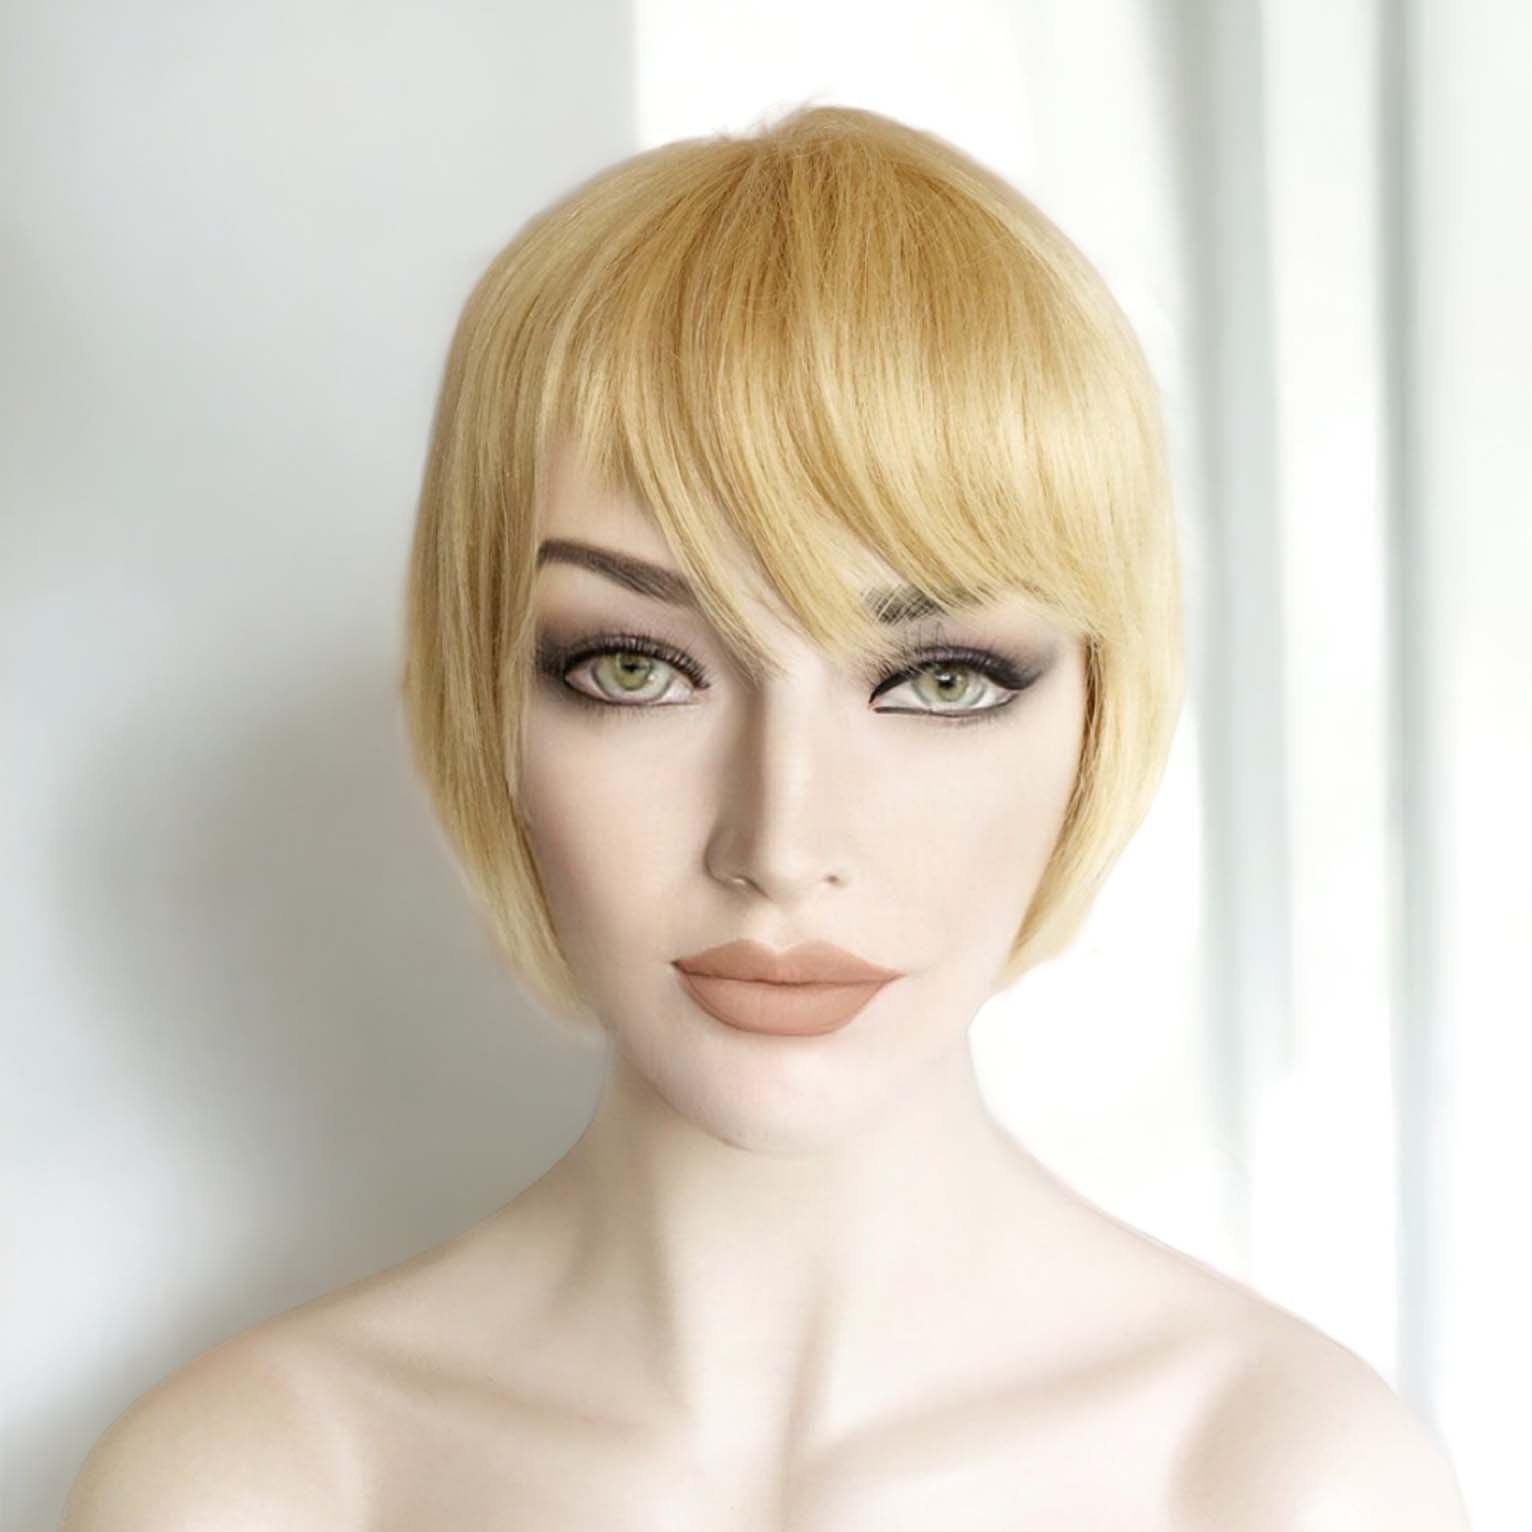 nevermindyrhead Women Blonde 613 Human Hair Short Bob Straight Fringe Bangs Wig